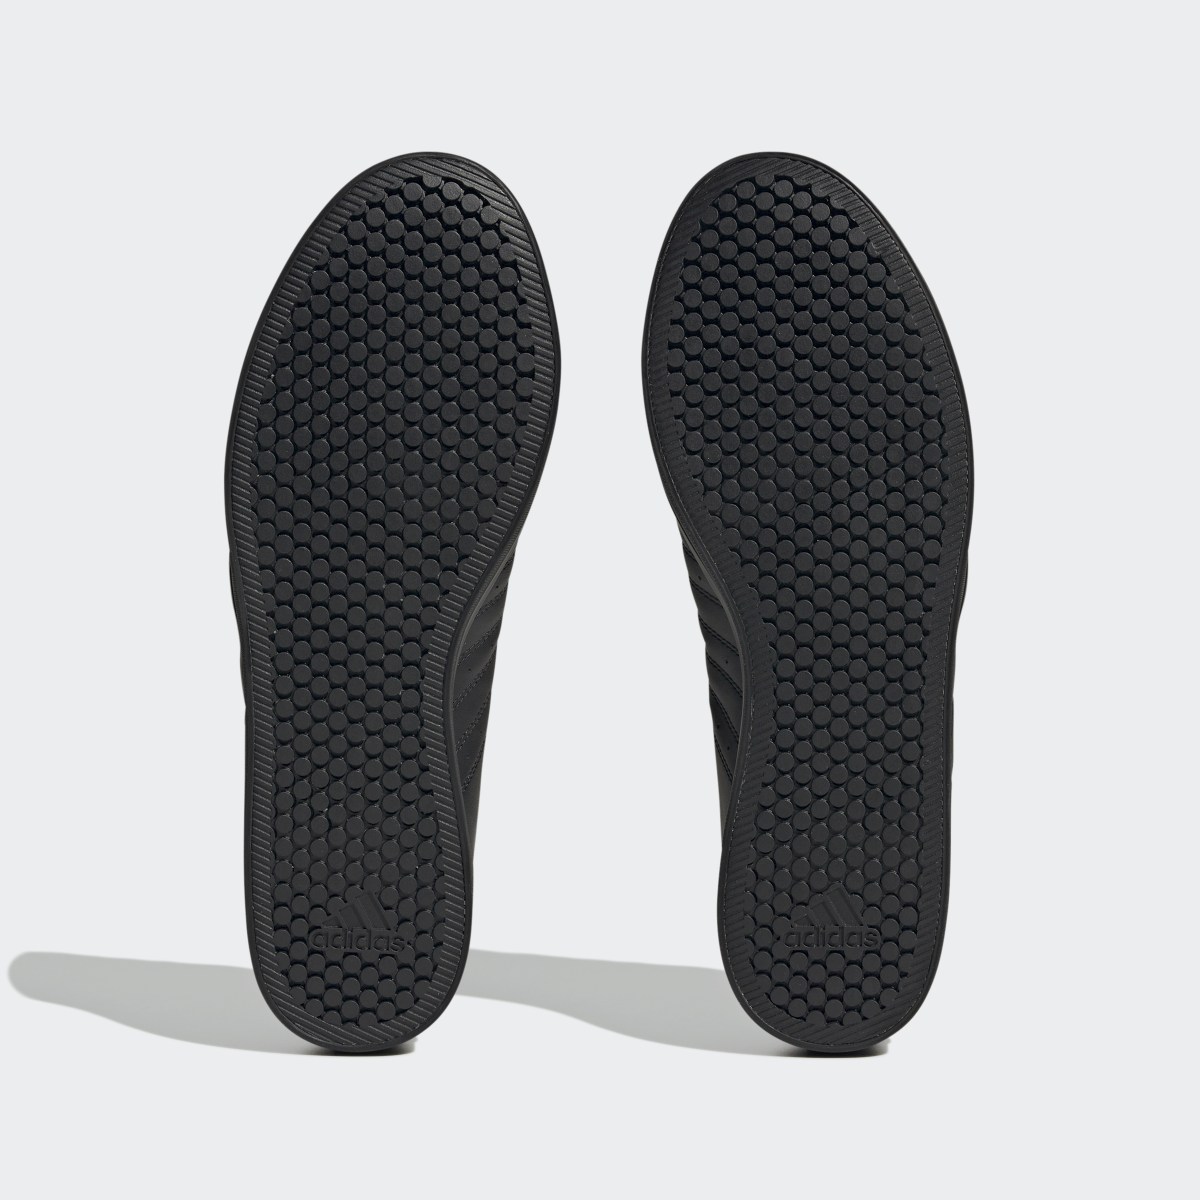 Adidas VS Pace 2.0 Ayakkabı. 4